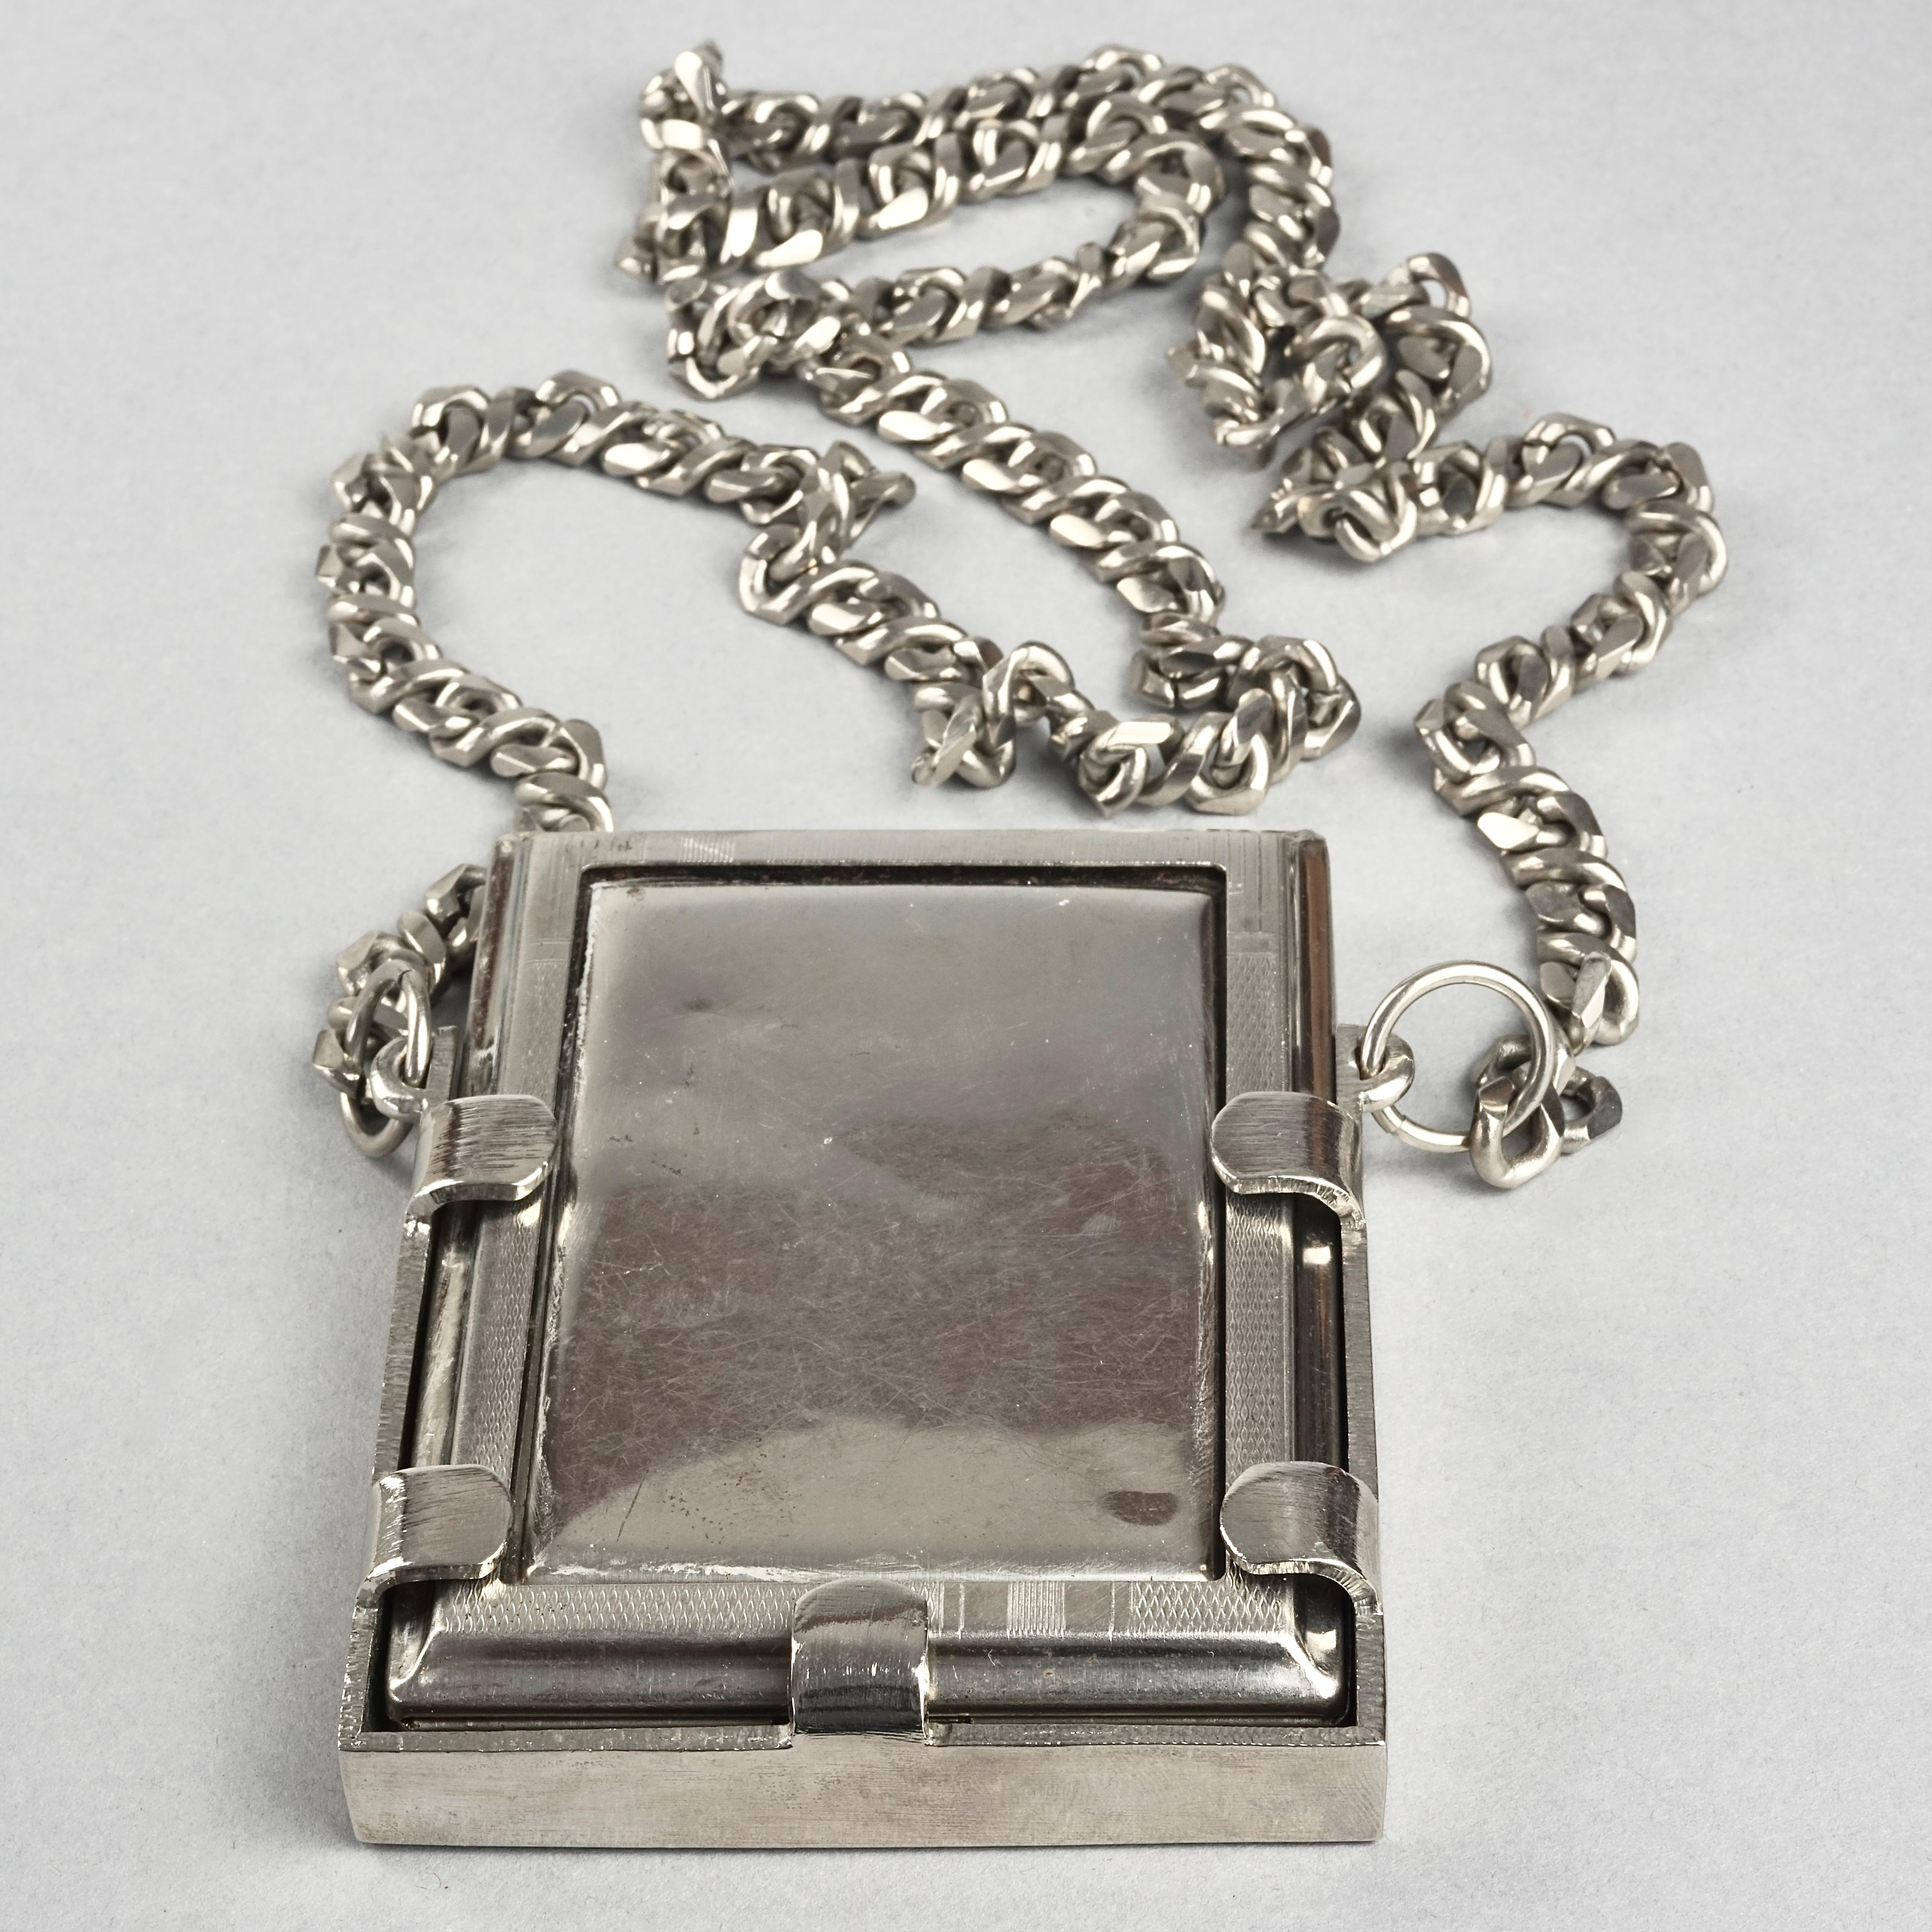 Women's or Men's Vintage Massive JEAN PAUL GAULTIER Silver Cigarette Holder Chain Necklace